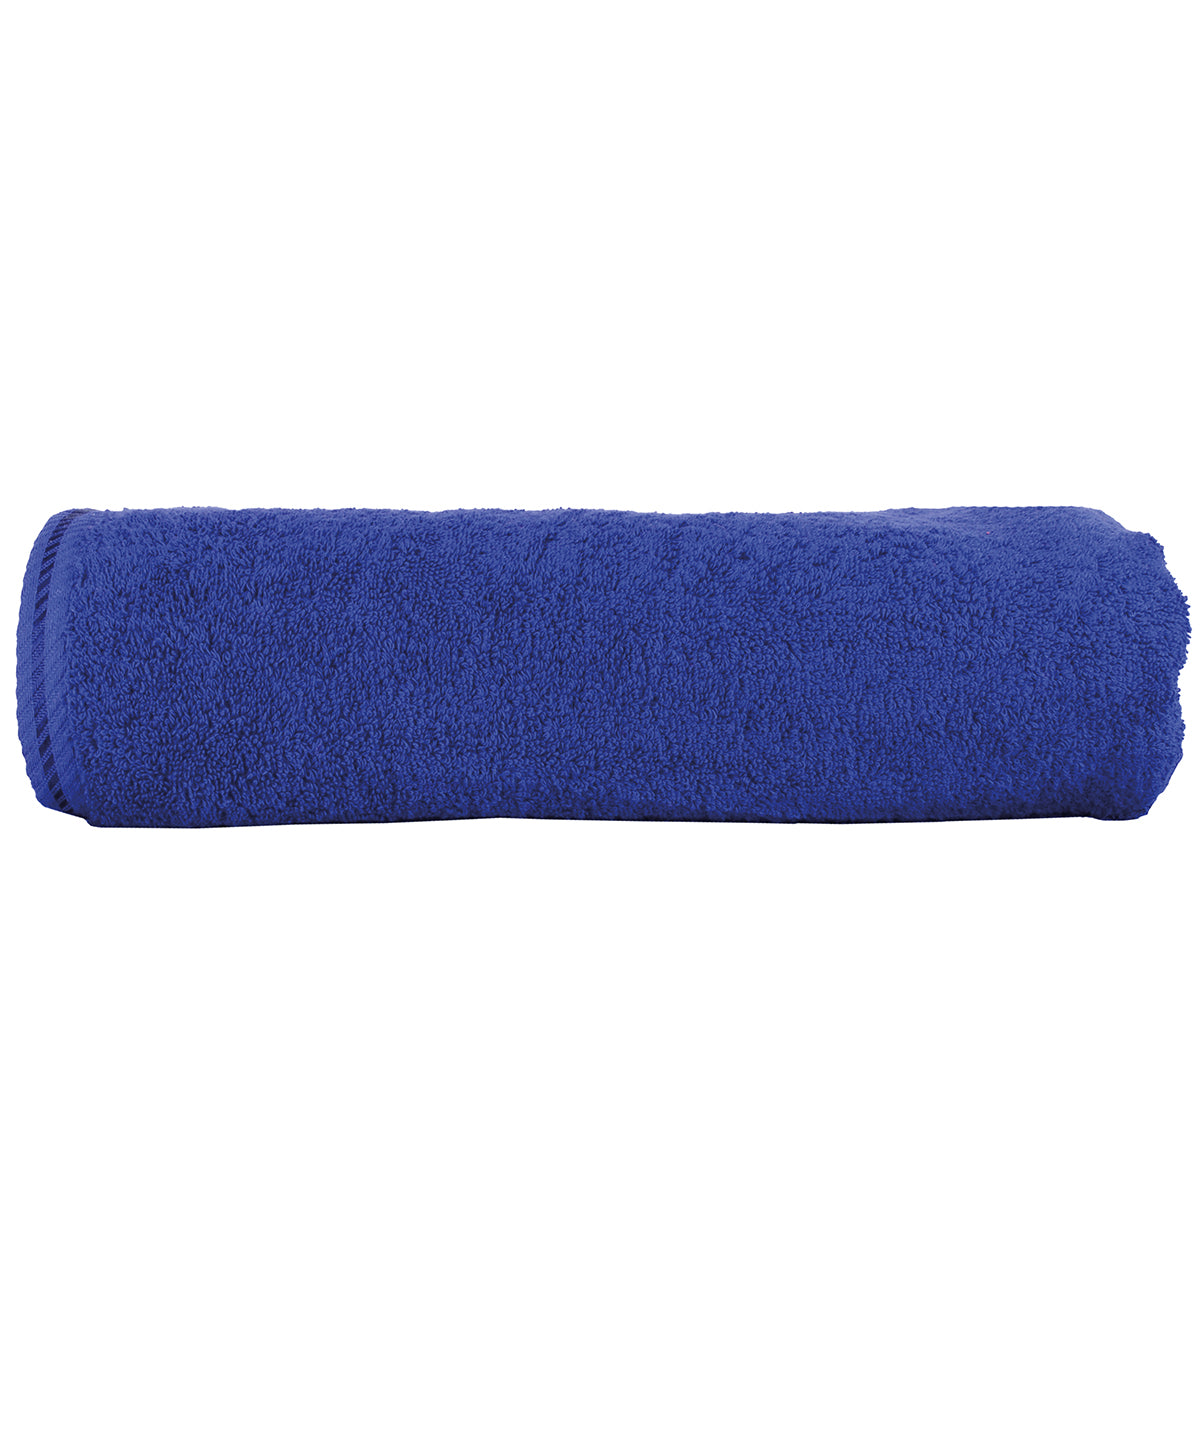 Personalised Towels - Mid Blue A&R Towels ARTG® Big towel